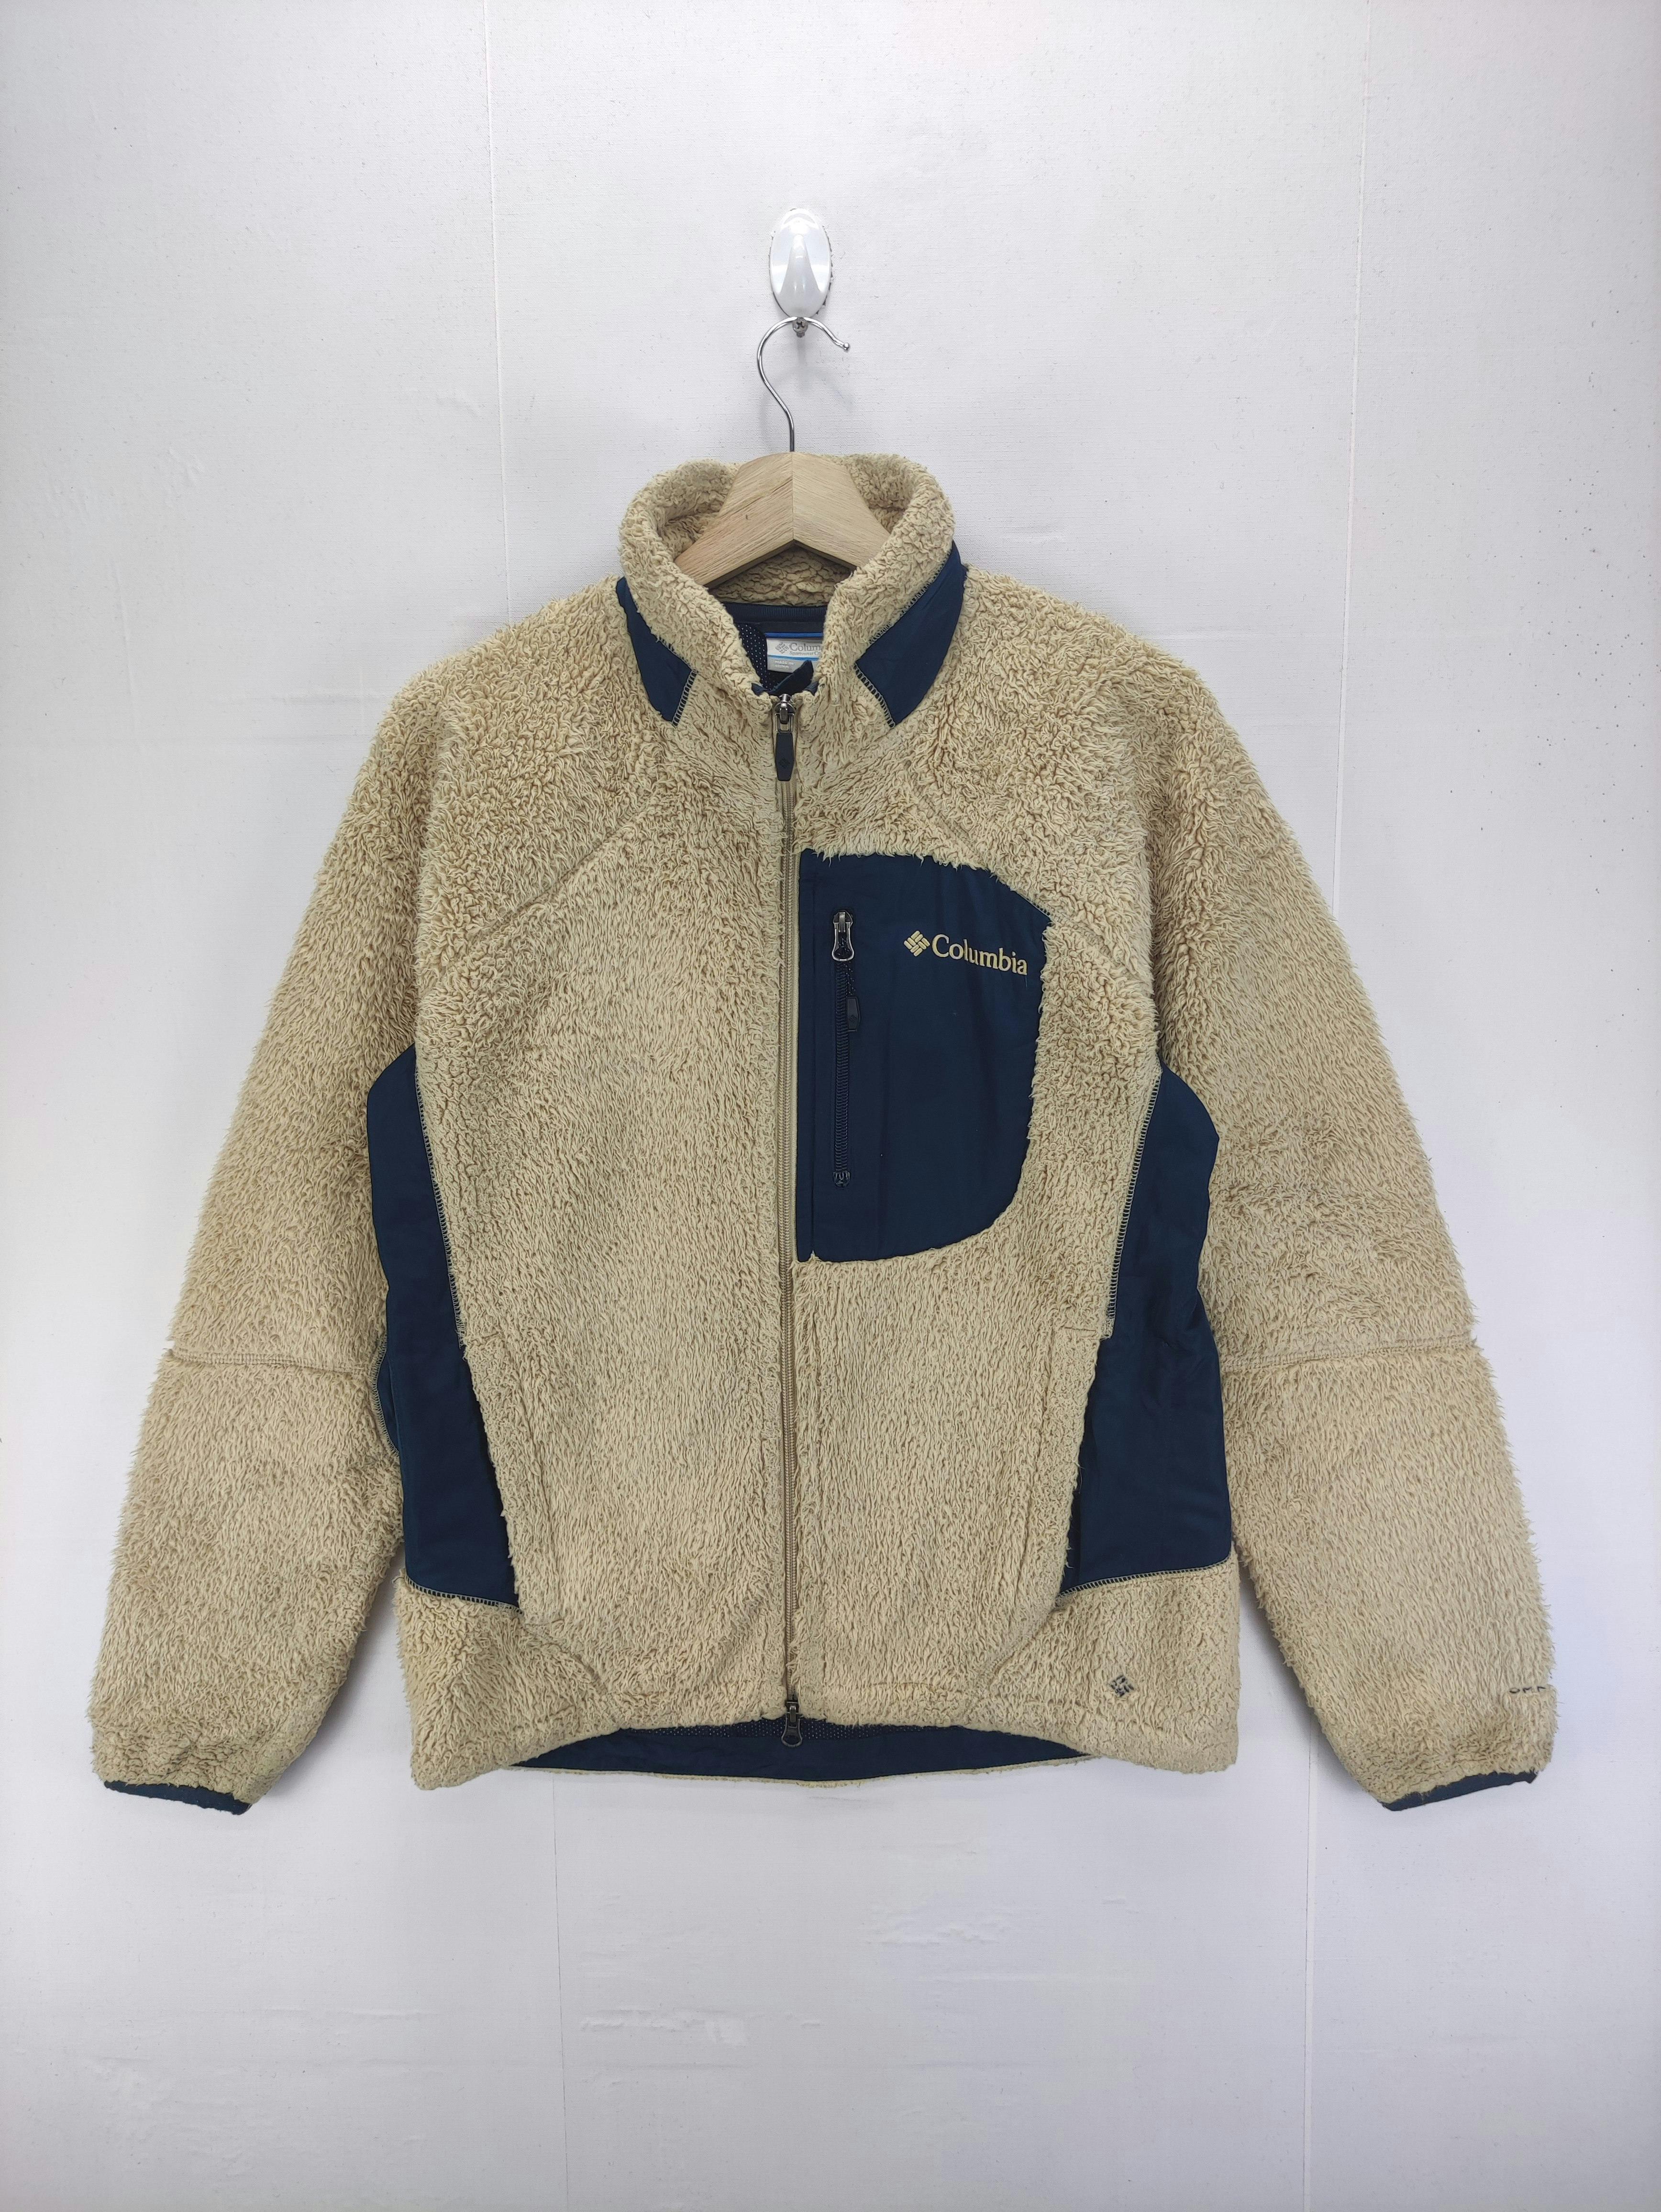 Vintage Columbia Sweater Jacket Zipper - 1